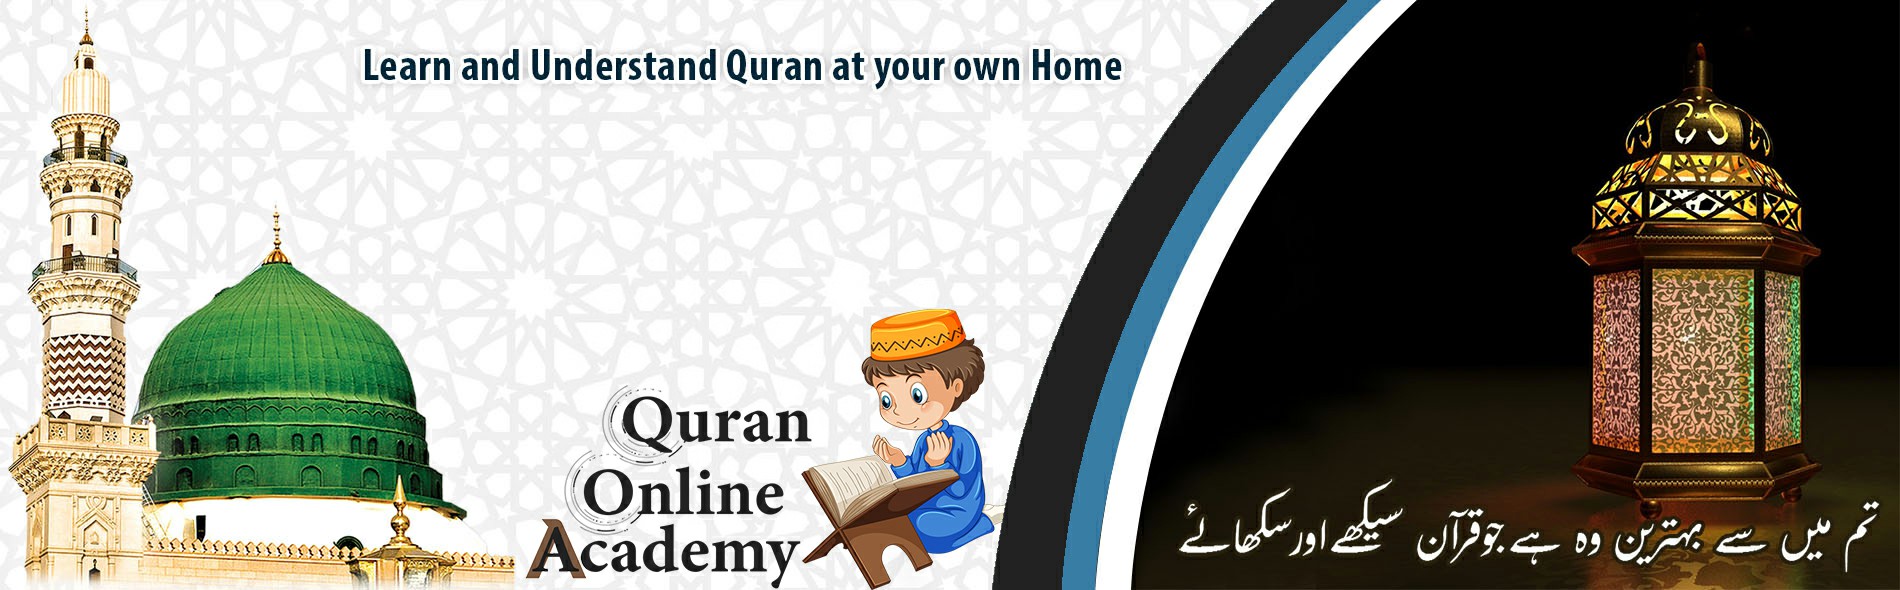 Quran Pak Online Academy UK